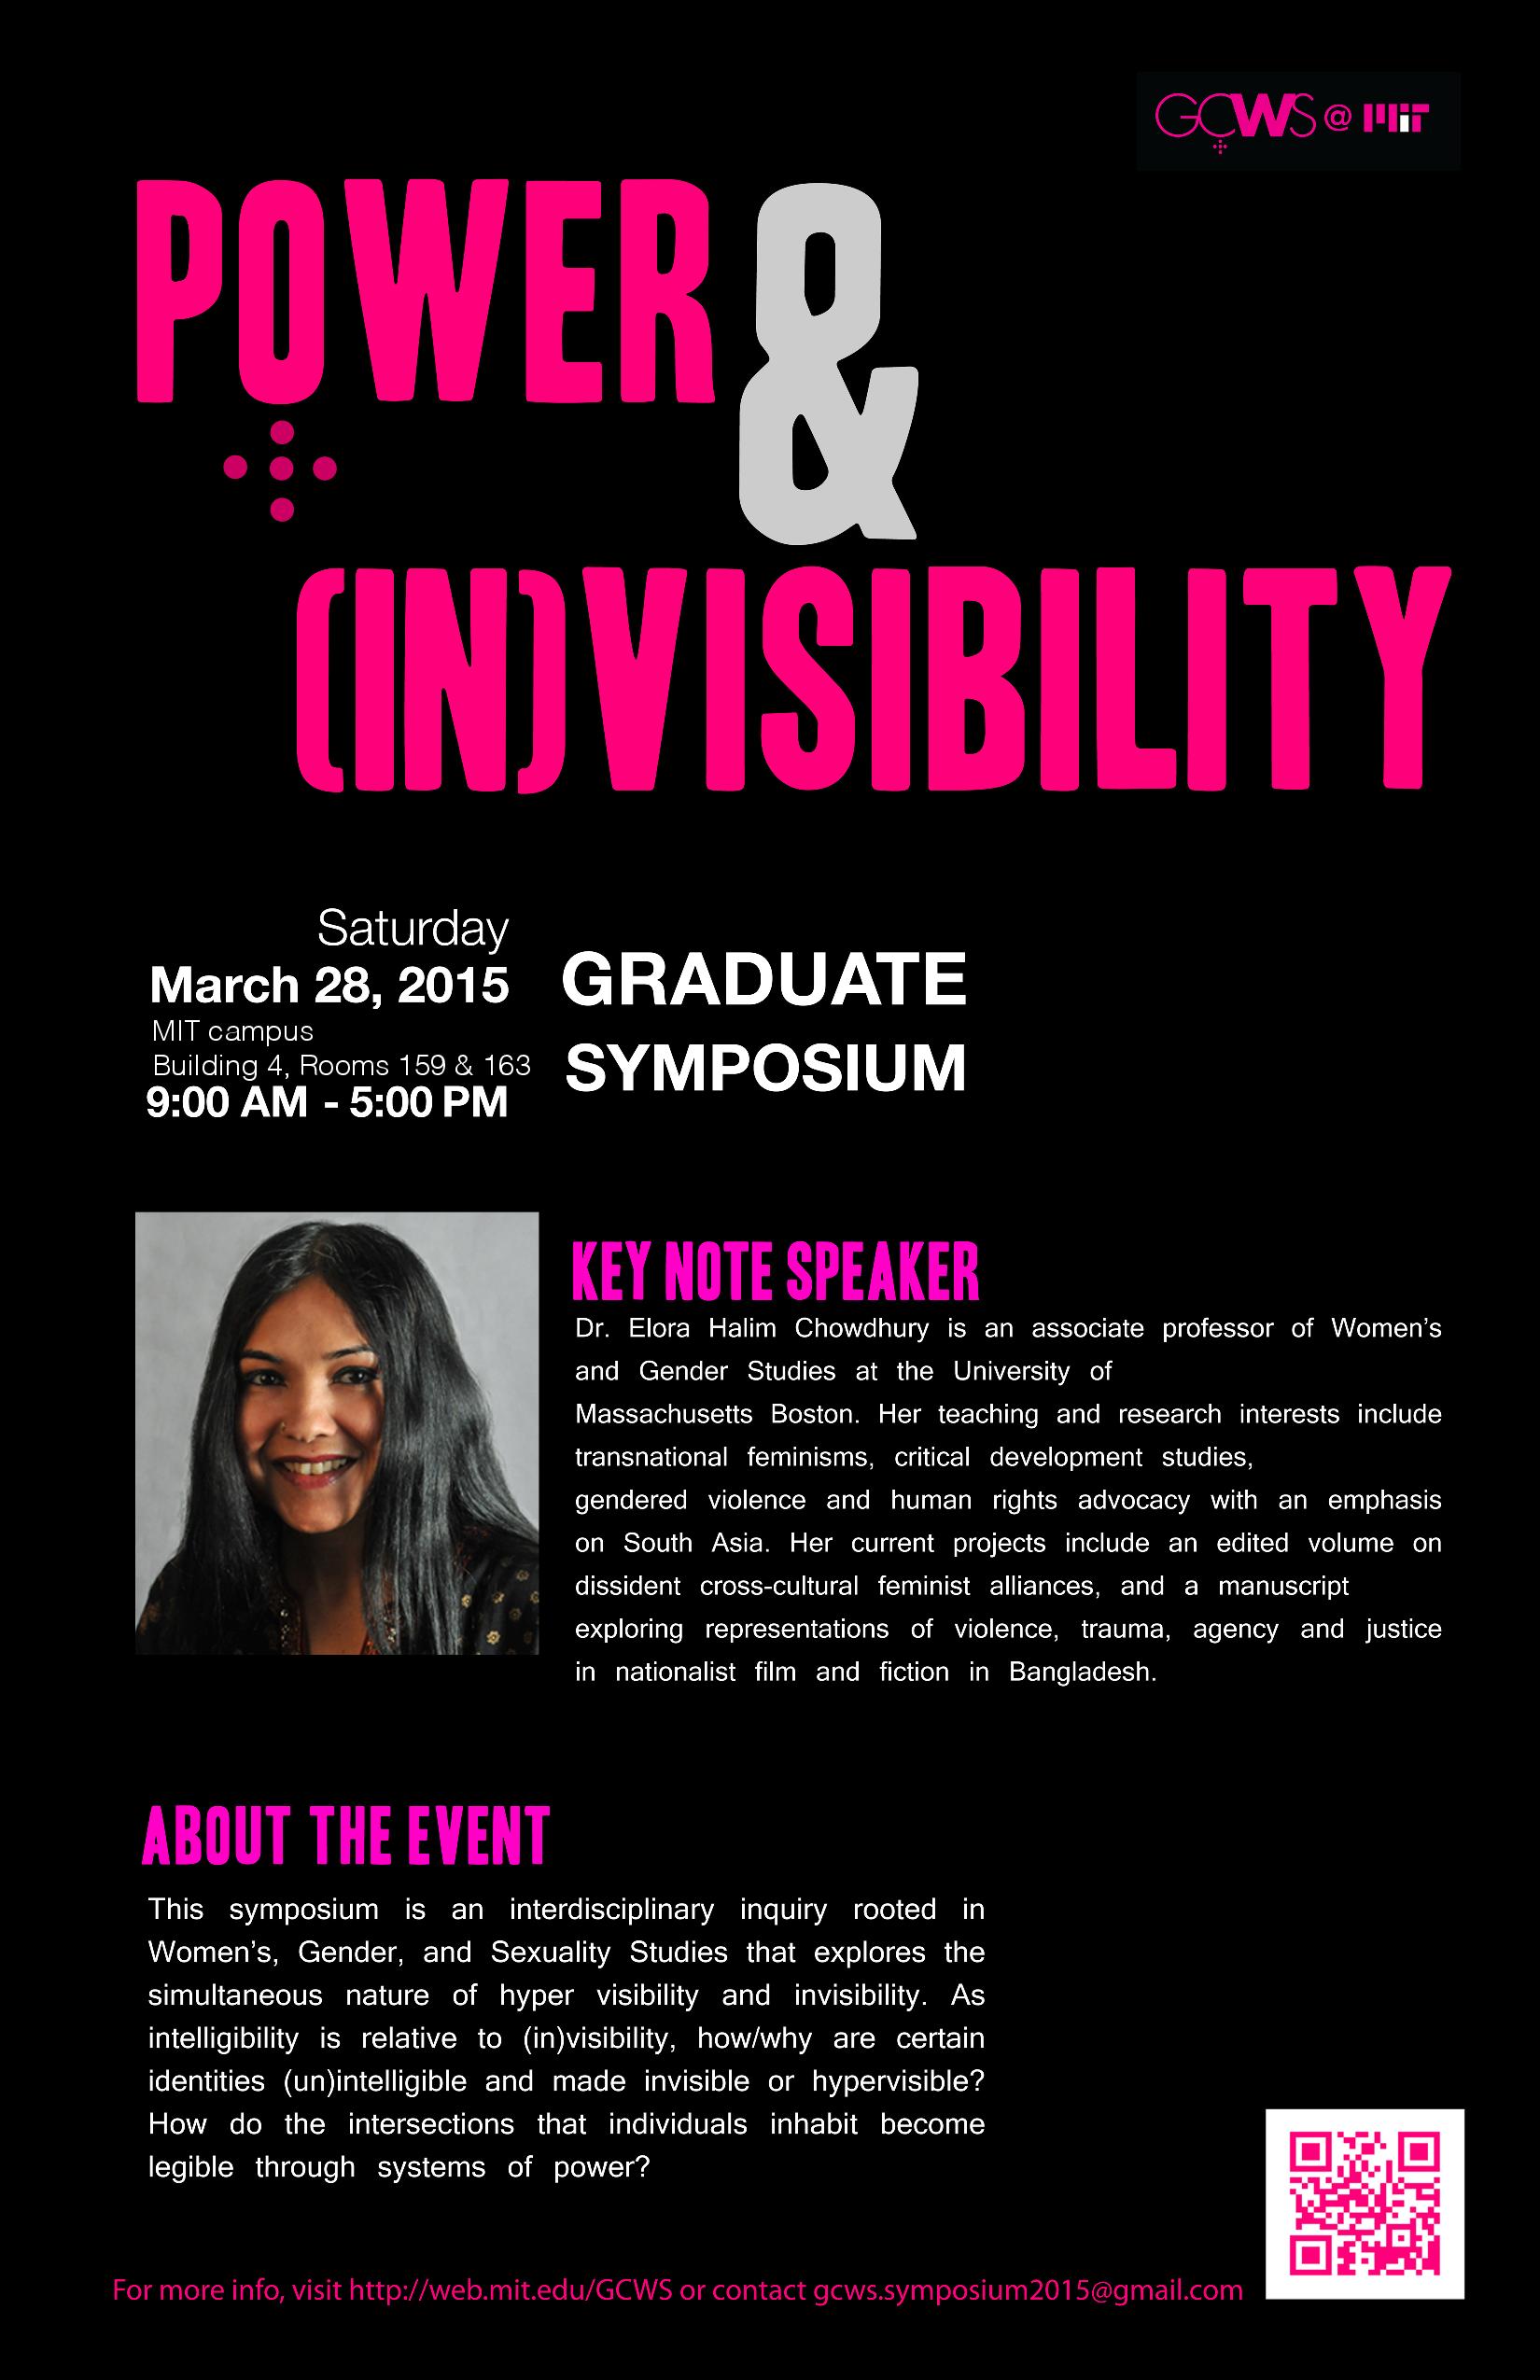 Graduate Consortium in Women’s Studies (GCWS) at MIT "Power and (In)Visibility Graduate Symposium," March 28, 2015